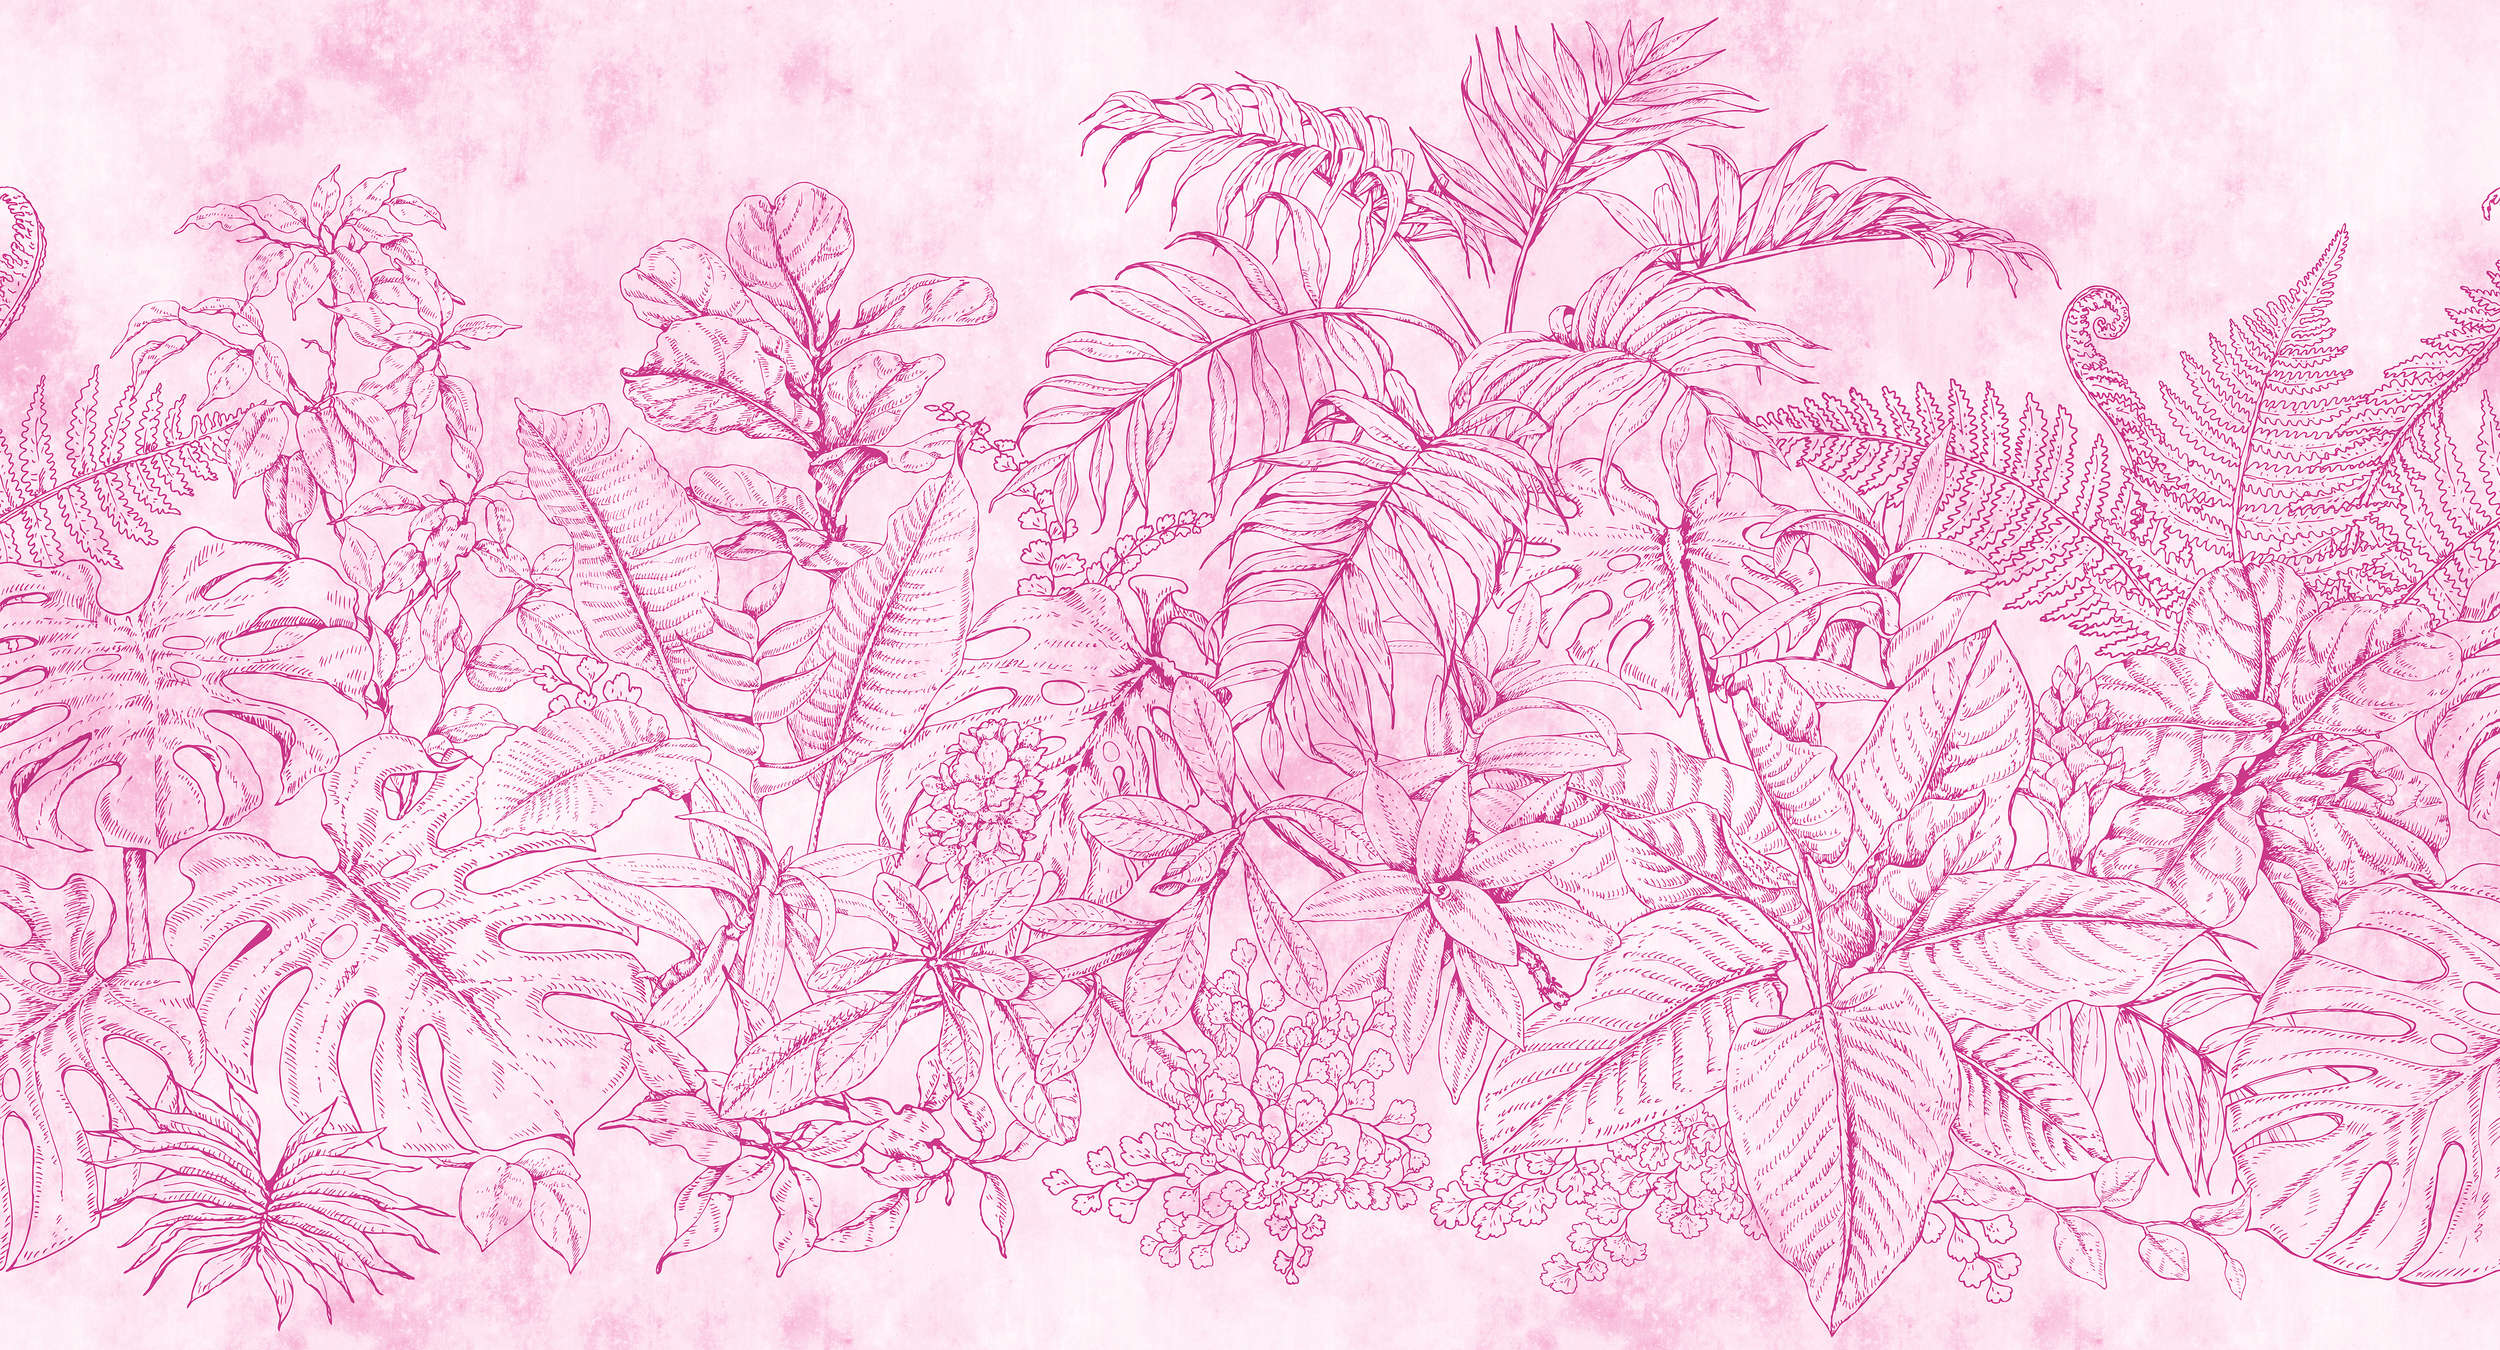             Photo wallpaper Flowers & Leaves Pattern - Pink, Cream
        